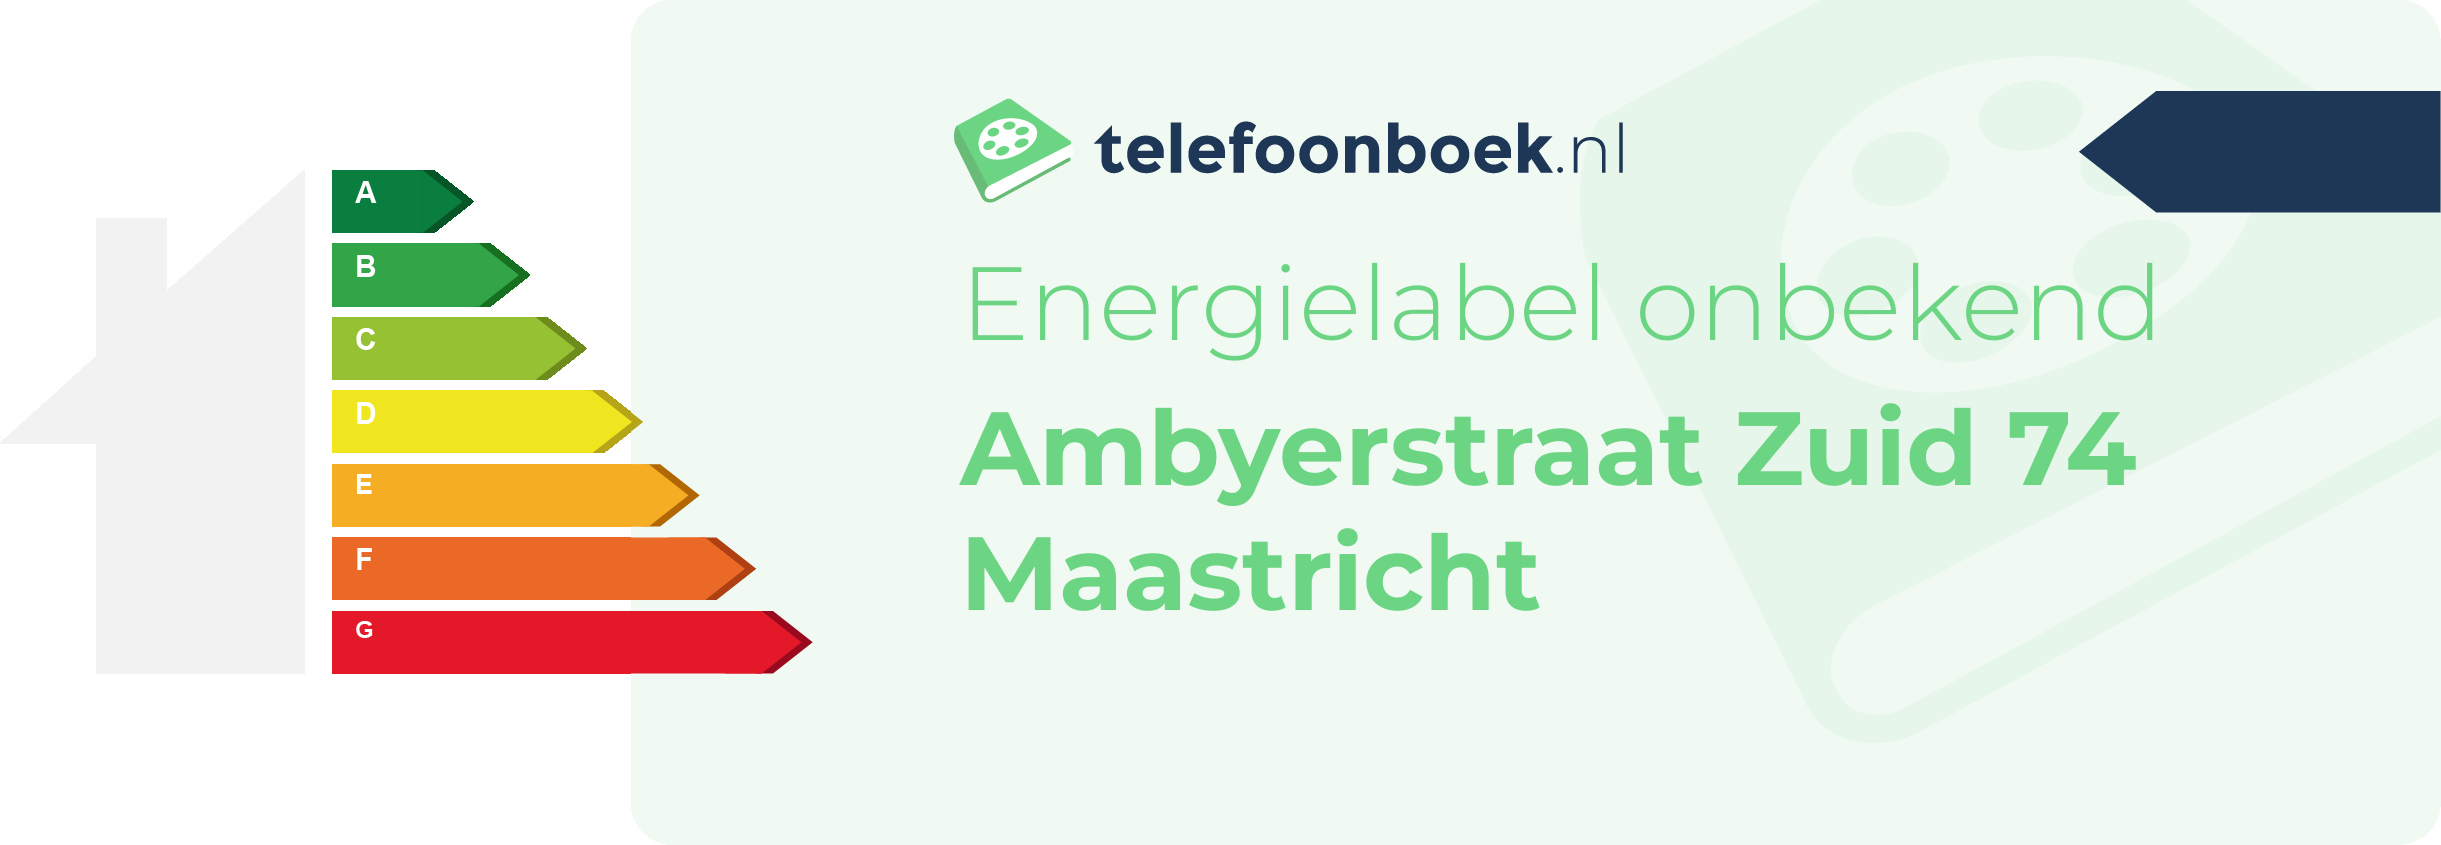 Energielabel Ambyerstraat Zuid 74 Maastricht